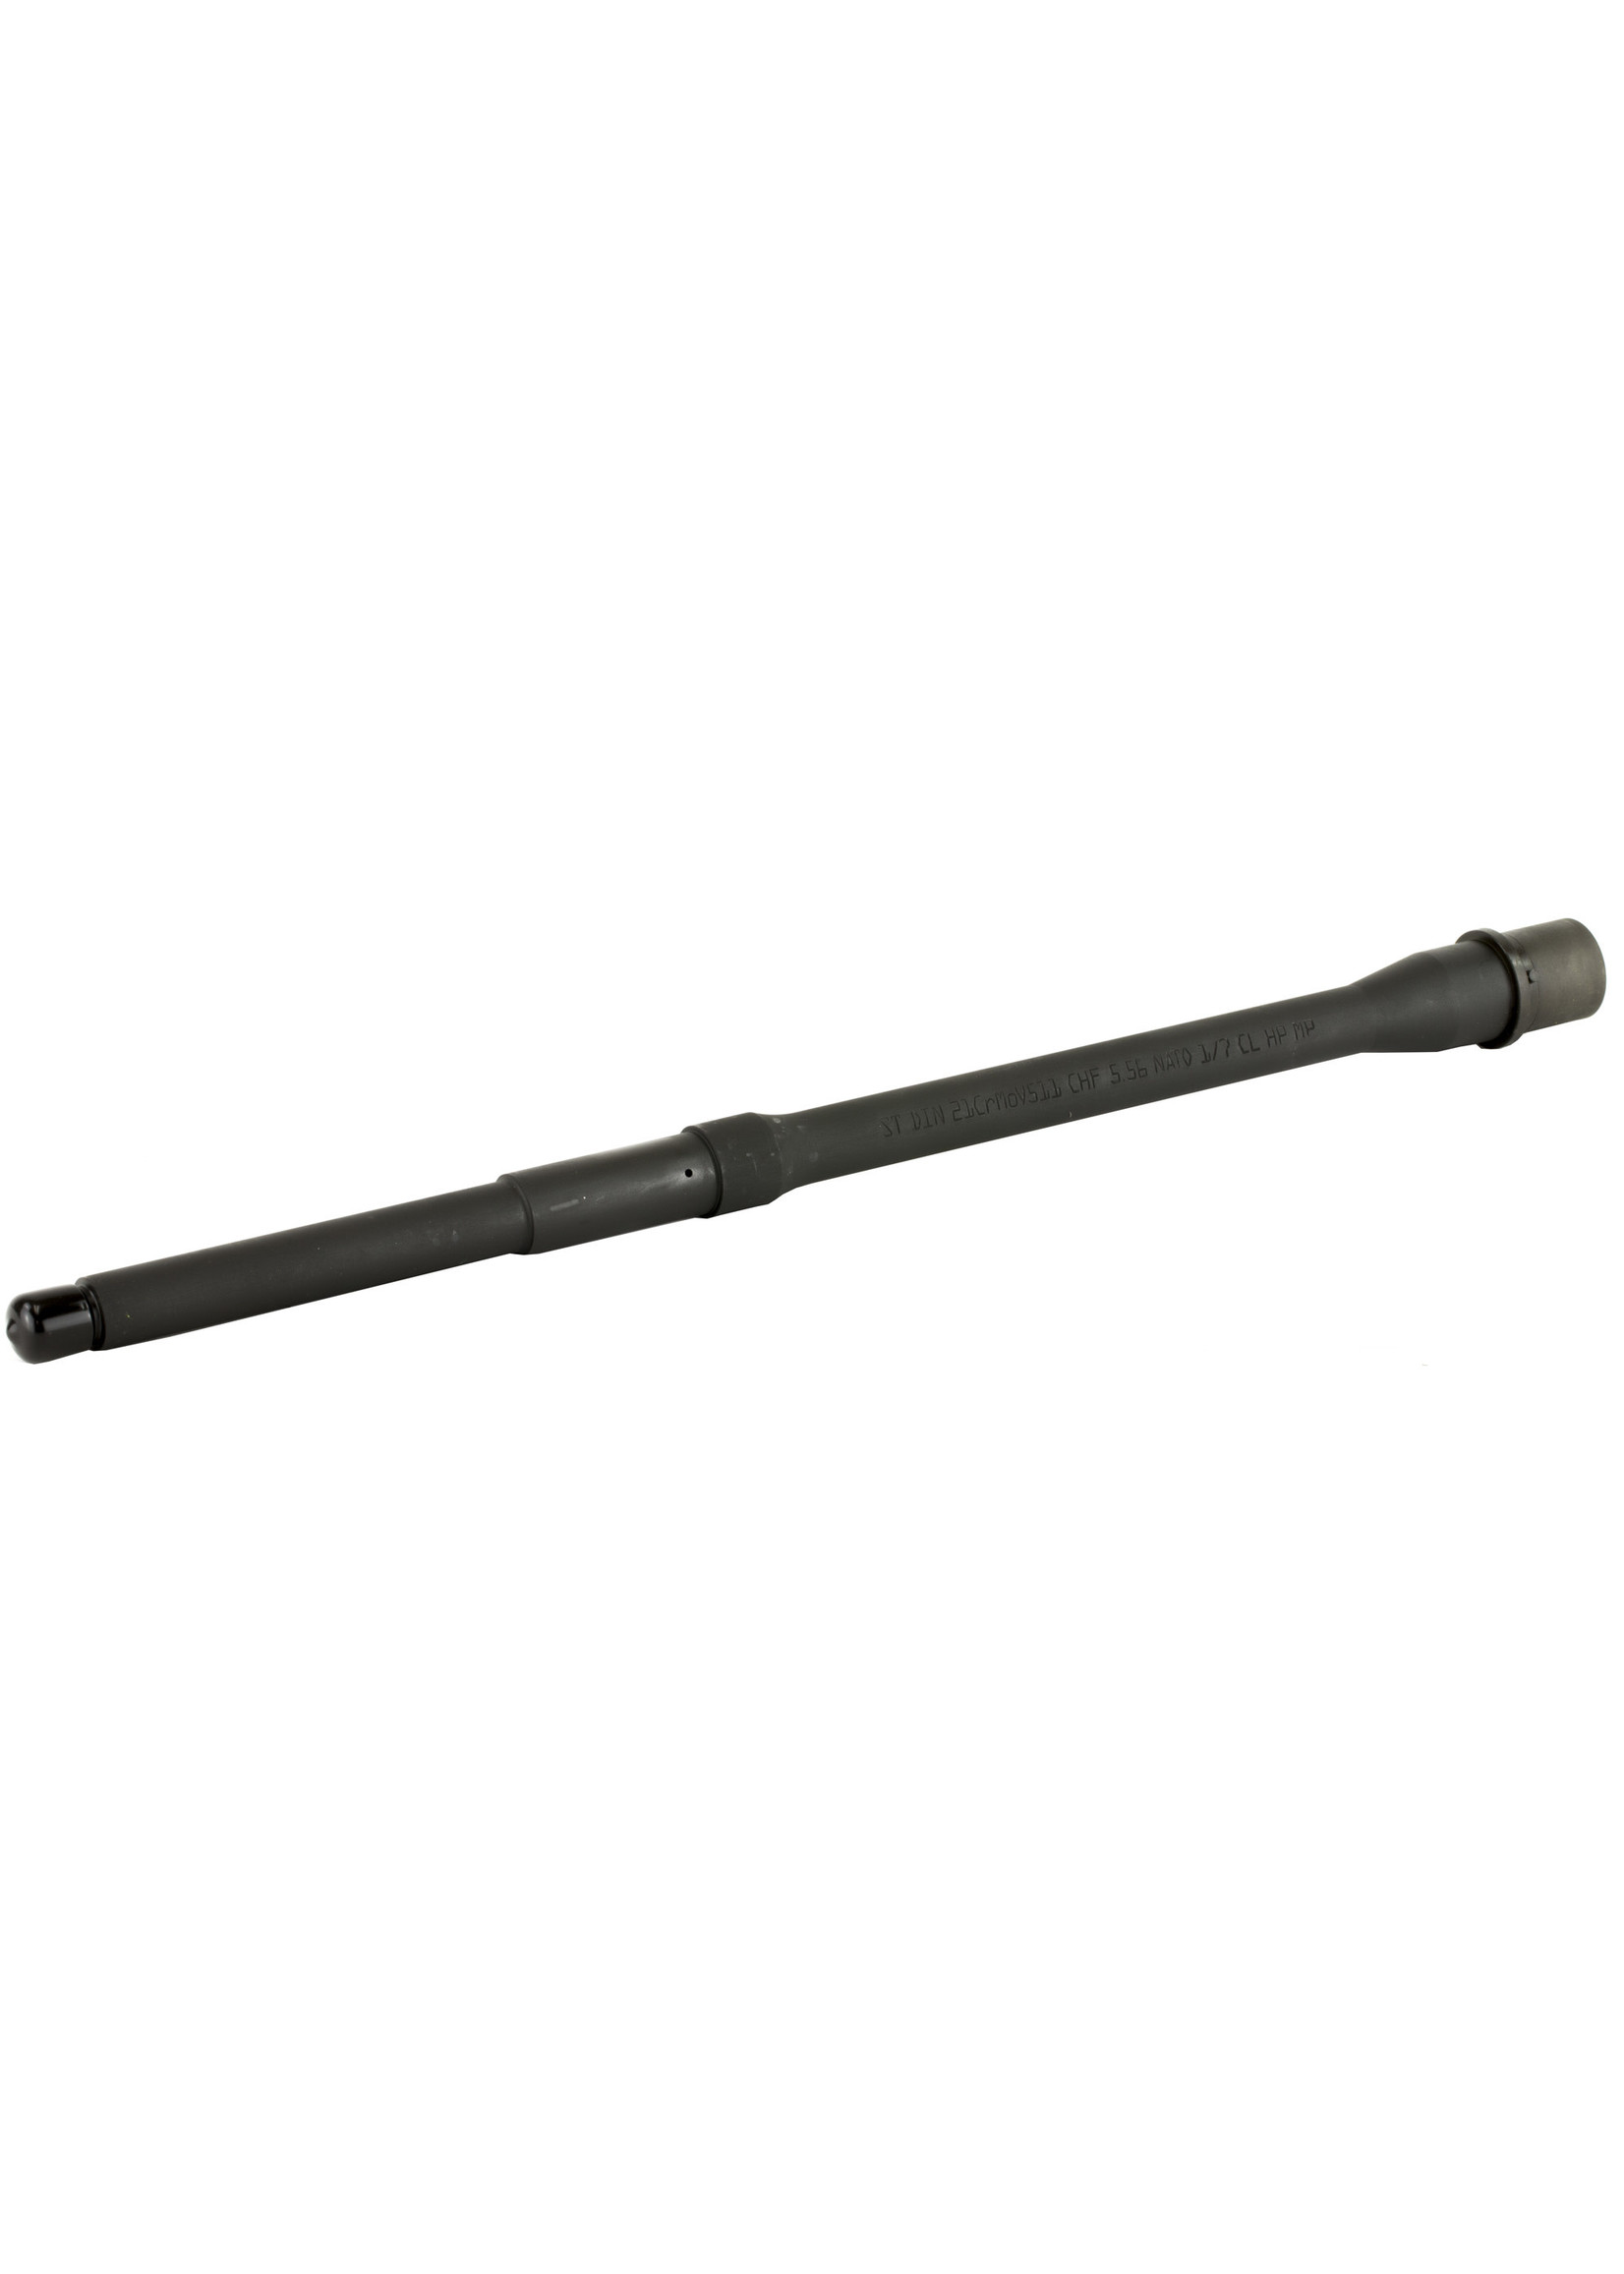 Spike's Tactical Spike's Tactical, Barrel, 223 Rem, 556NATO, 16" Hammer Forged Barrel, 1:7 Twist, Fits AR Rifles, 1/2x28 TPI Thread, Black Finish